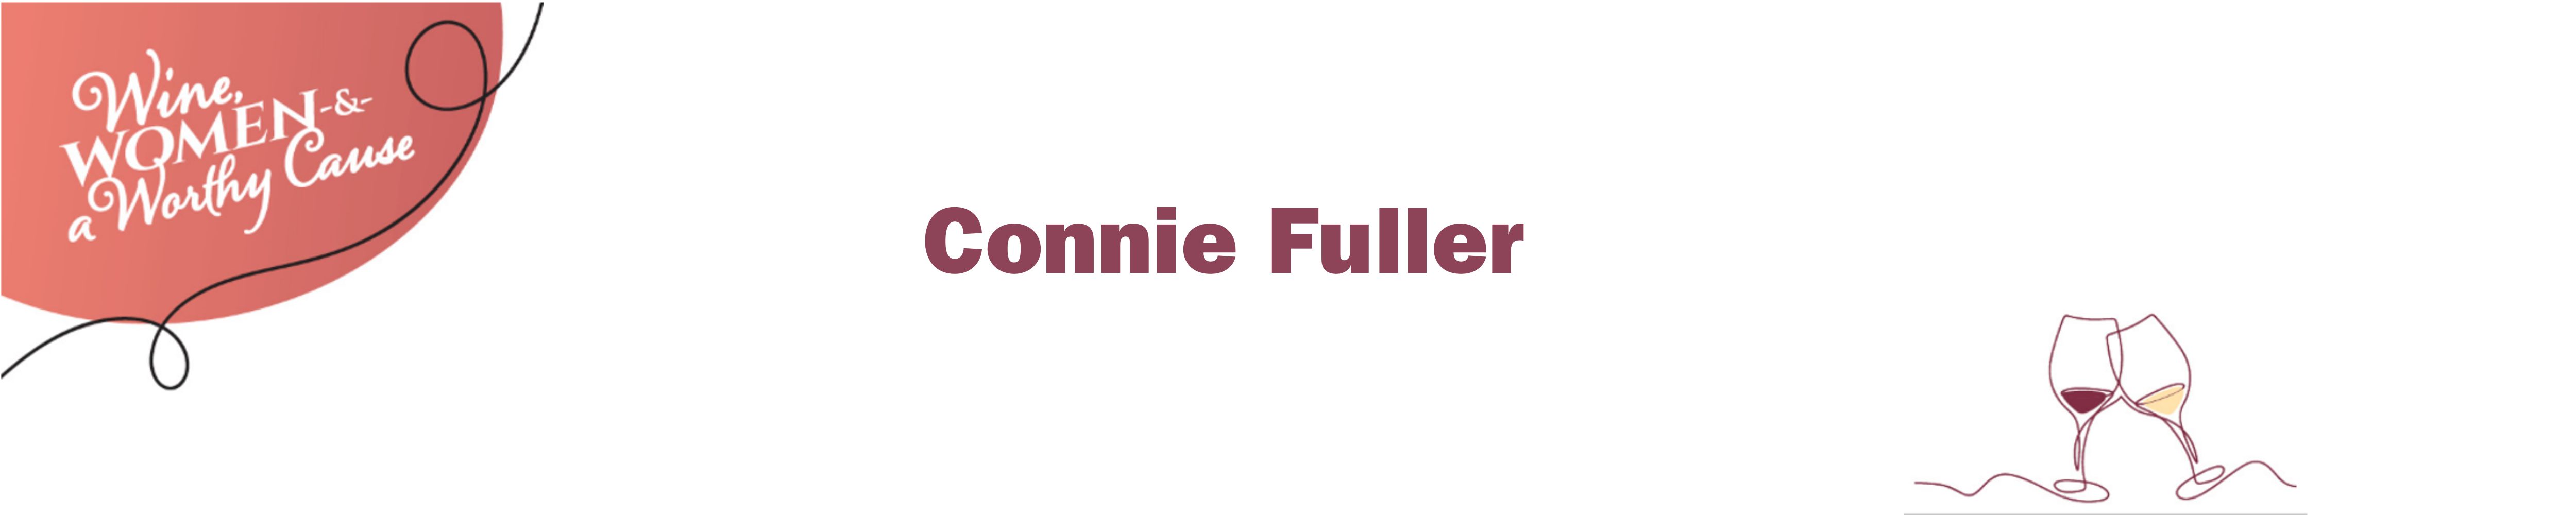 Connie Fuller